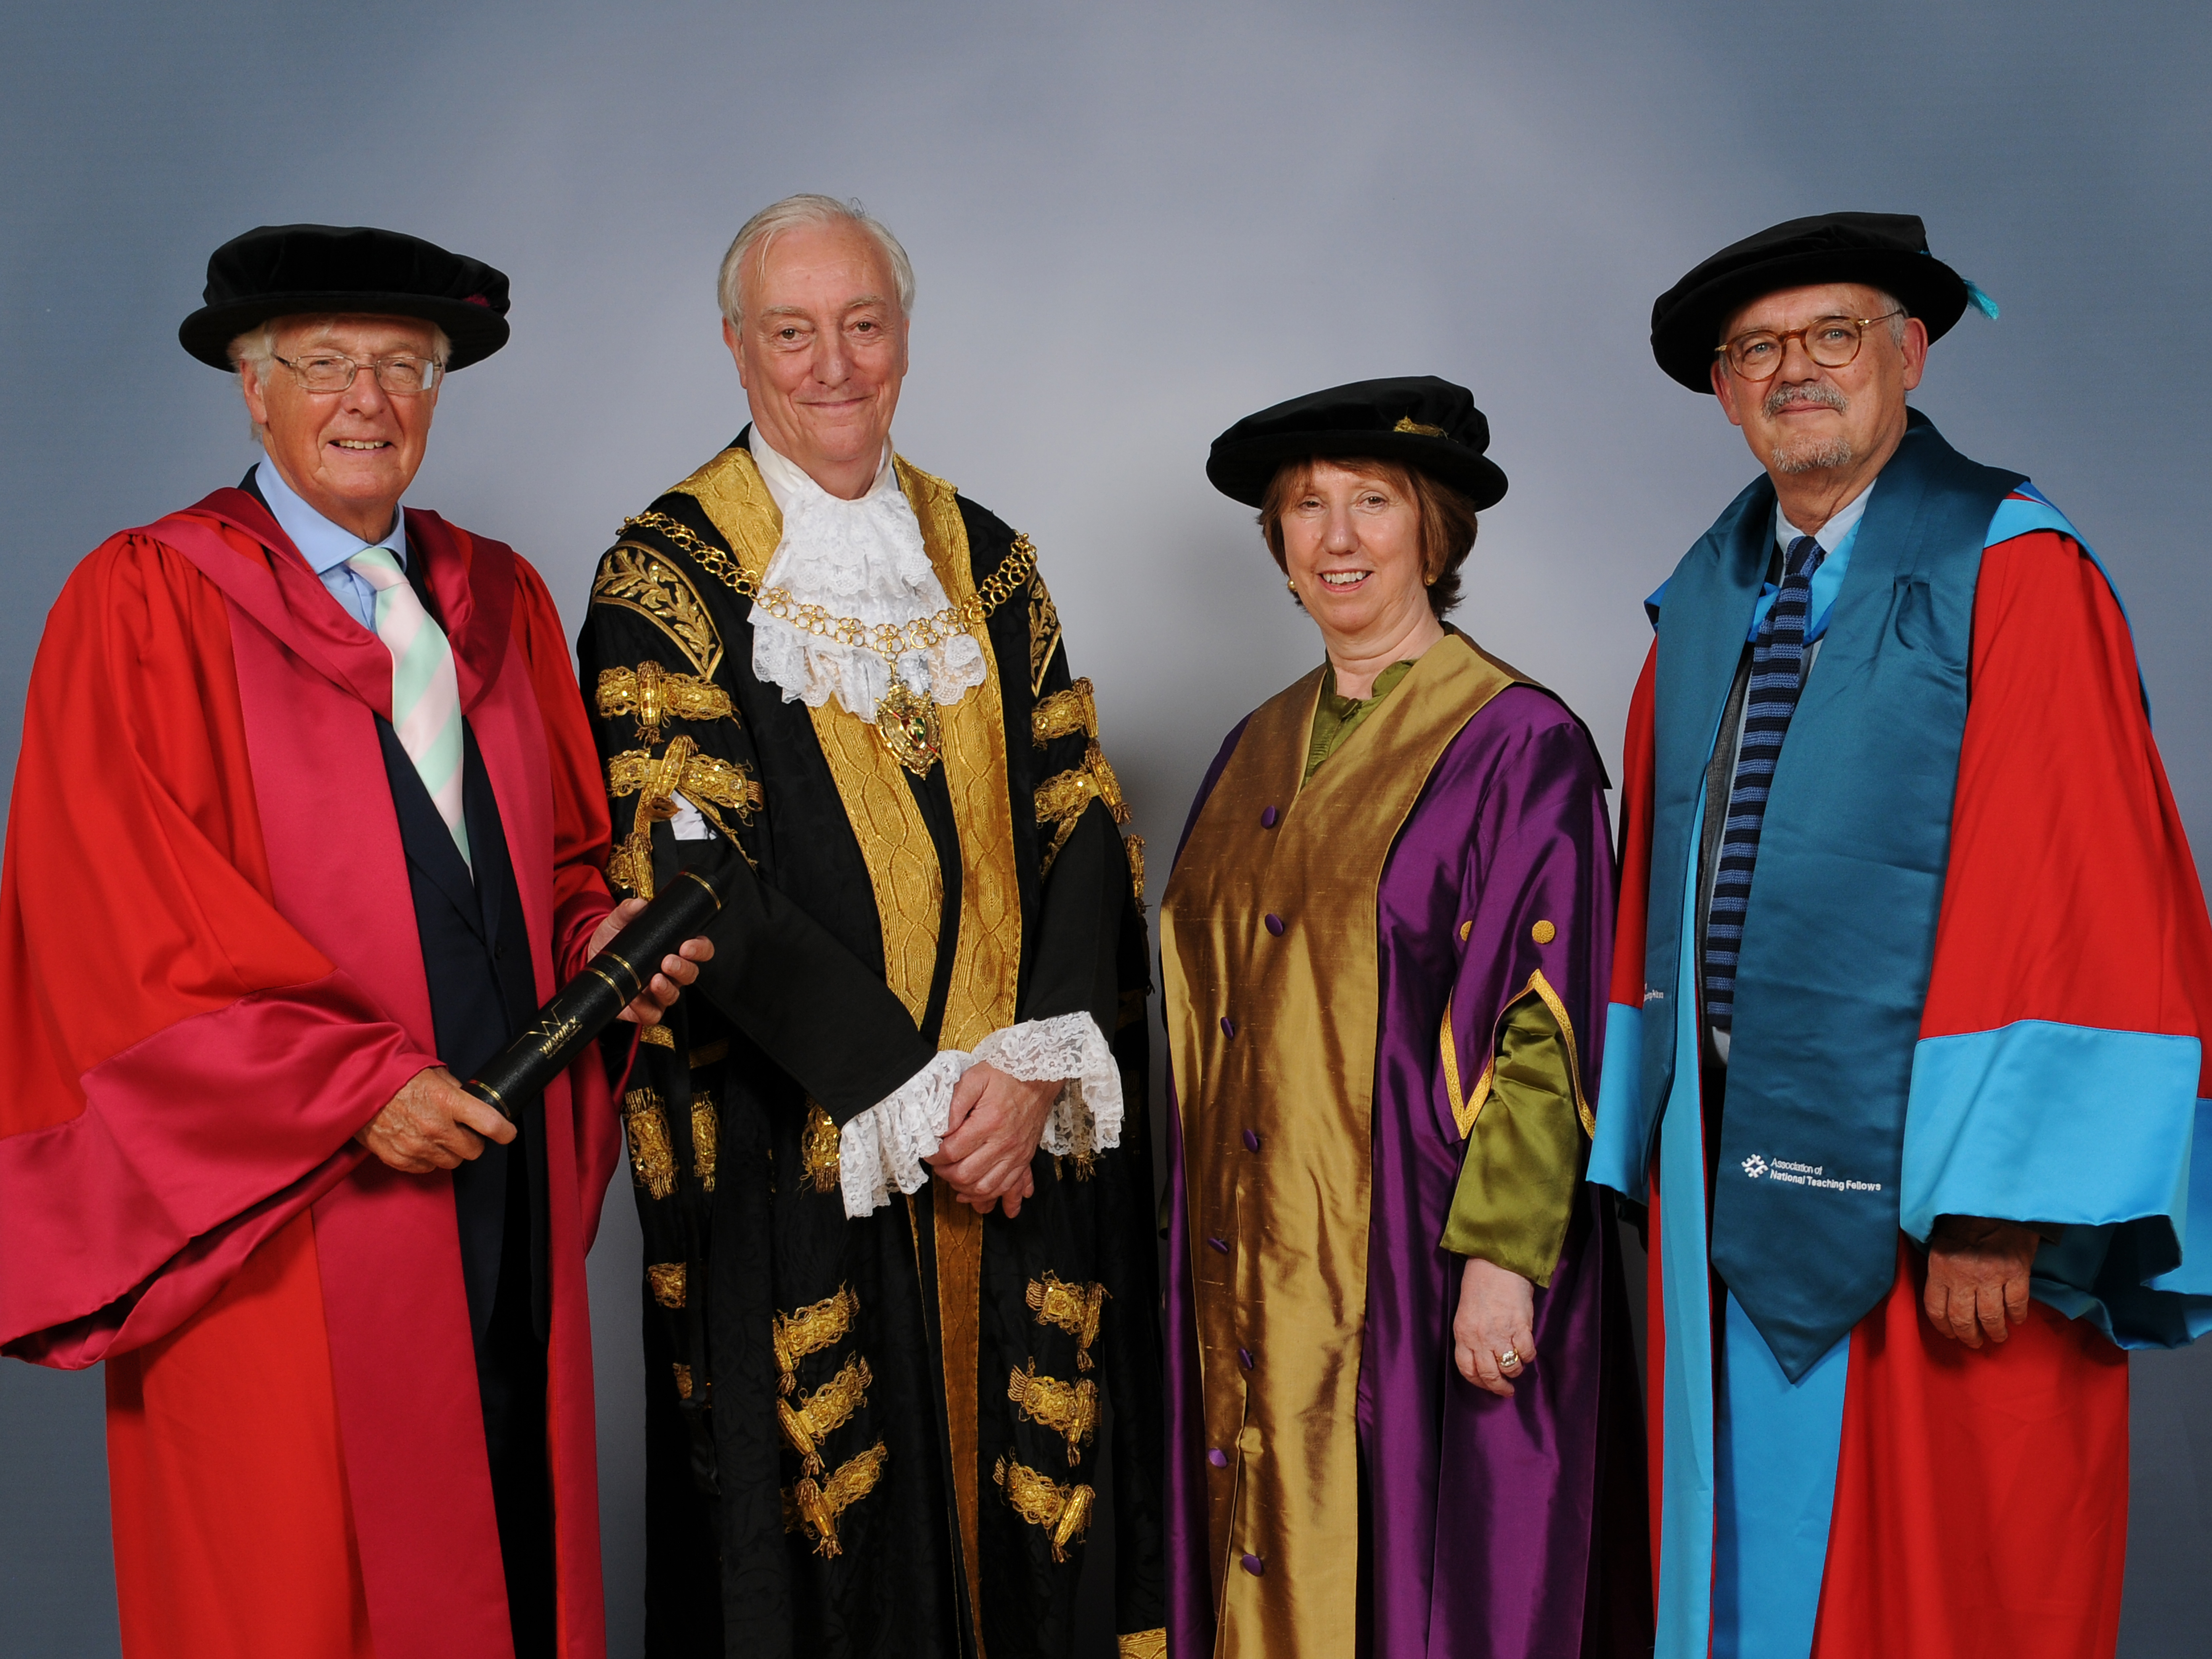 David Burbidge, the Lord Mayor of Coventry Tony Skipper, University of Warwick Chancellor Baroness Kathy Ashton and Professor Jonothan Neelands